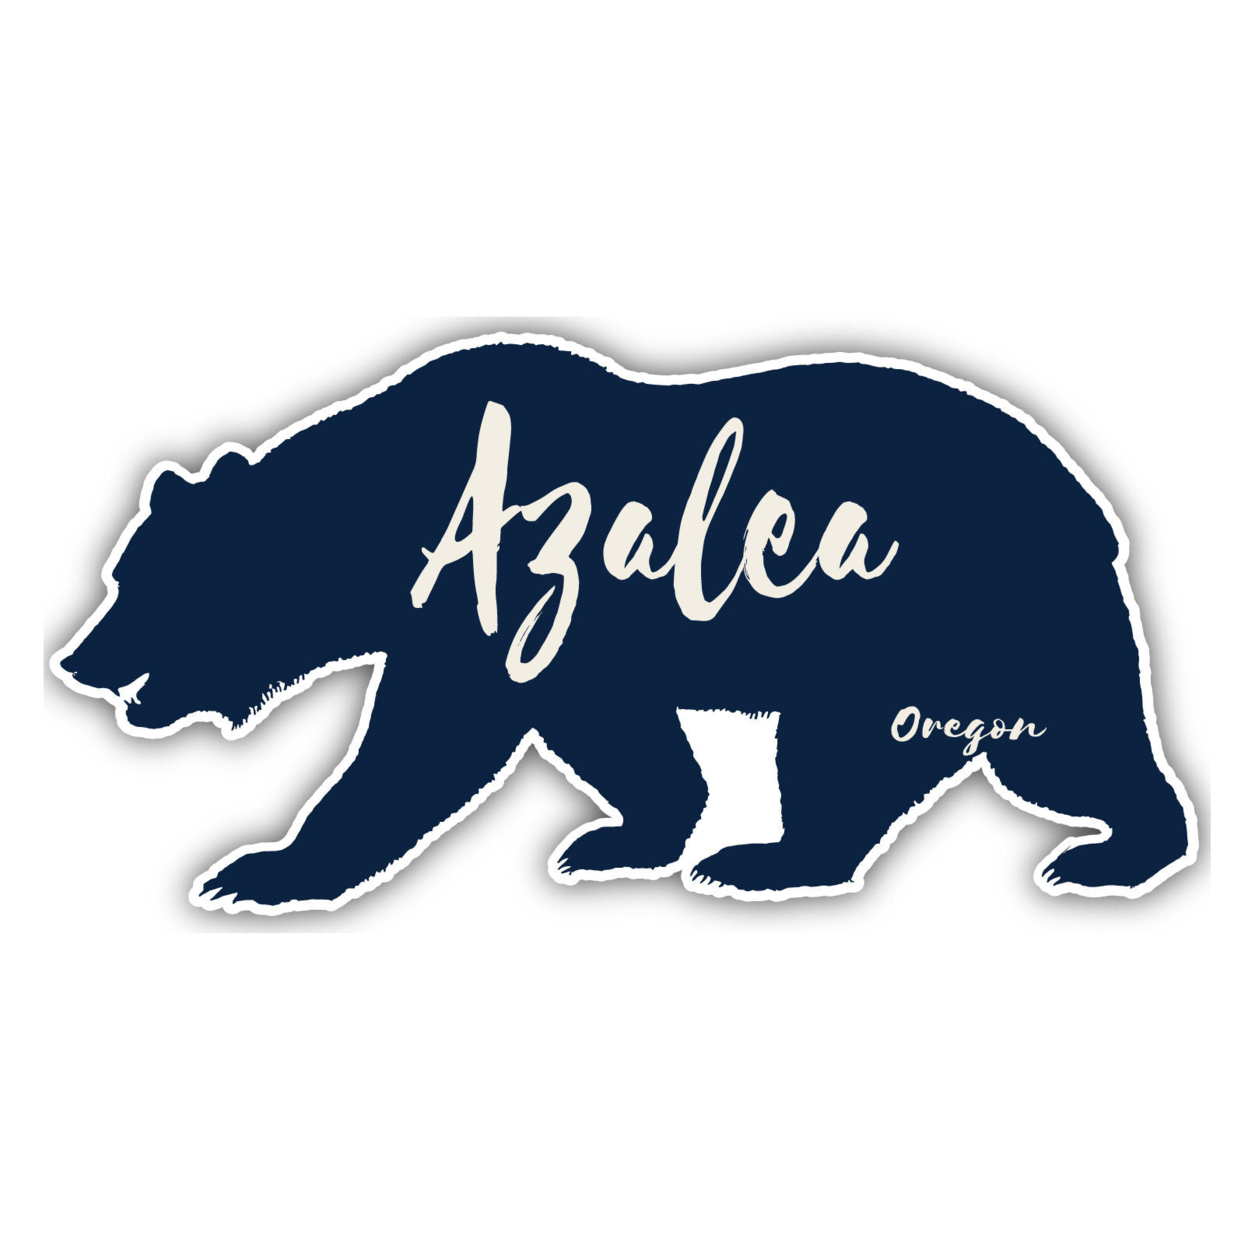 Azalea Oregon Souvenir Decorative Stickers (Choose Theme And Size) - 4-Pack, 12-Inch, Bear